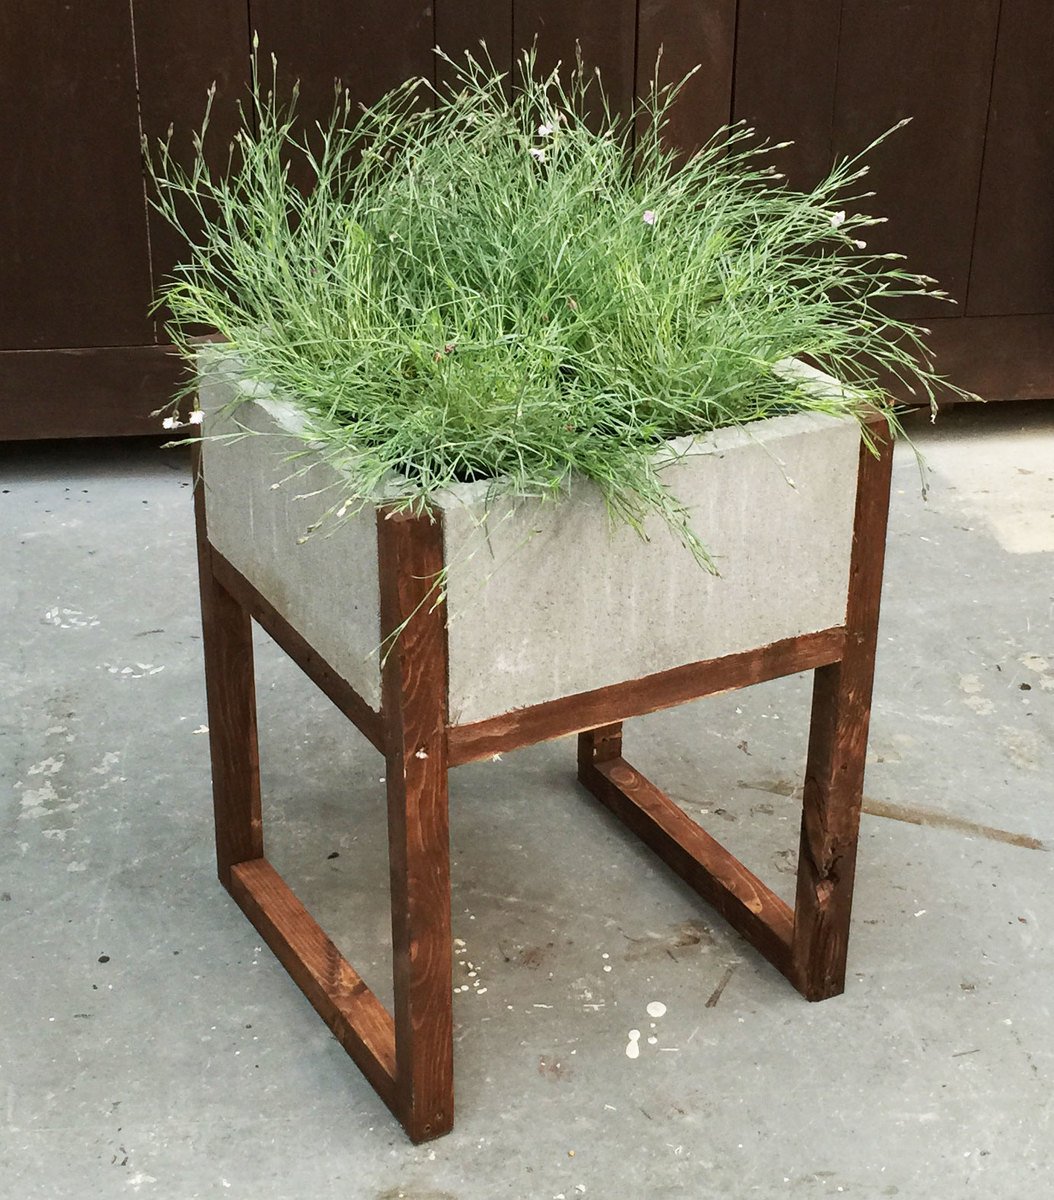 DIY Wood Plant Stand Anyone Can Build - Mod Podge Rocks